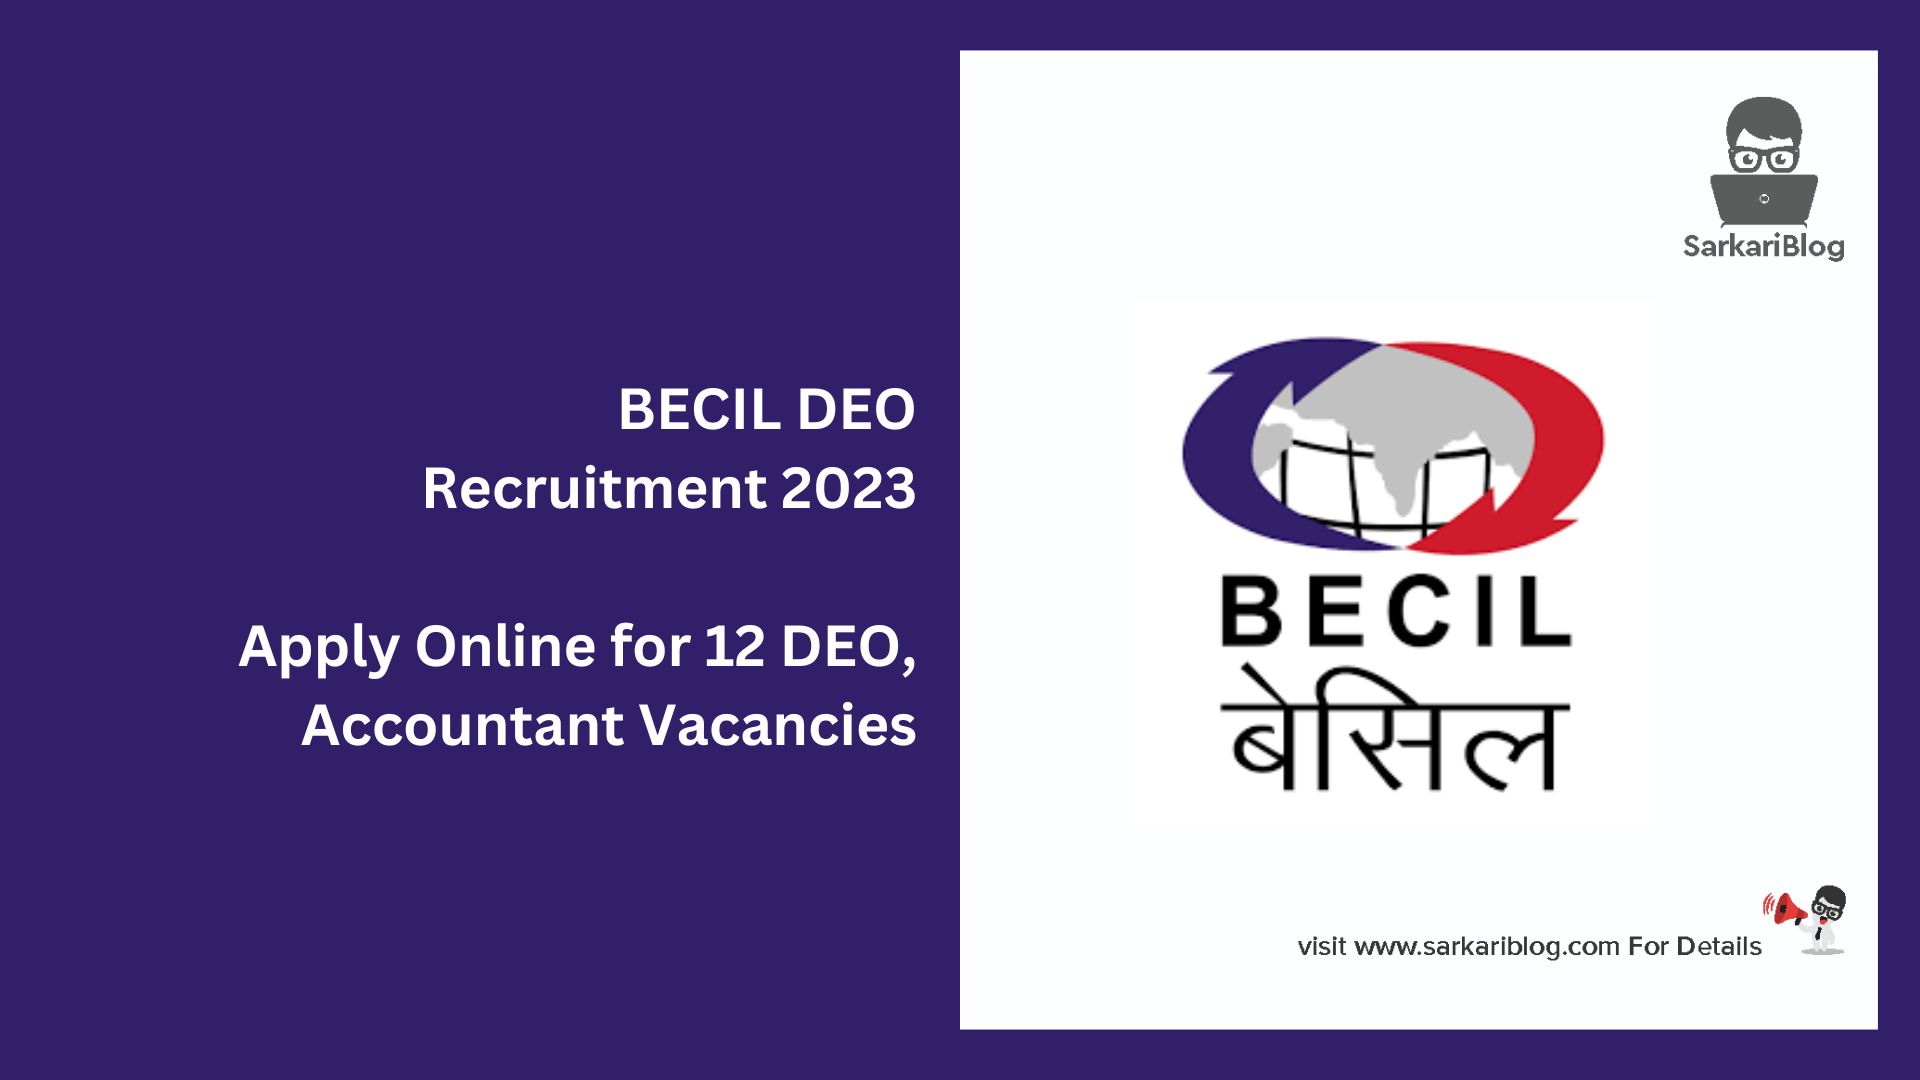 BECIL DEO Recruitment 2023